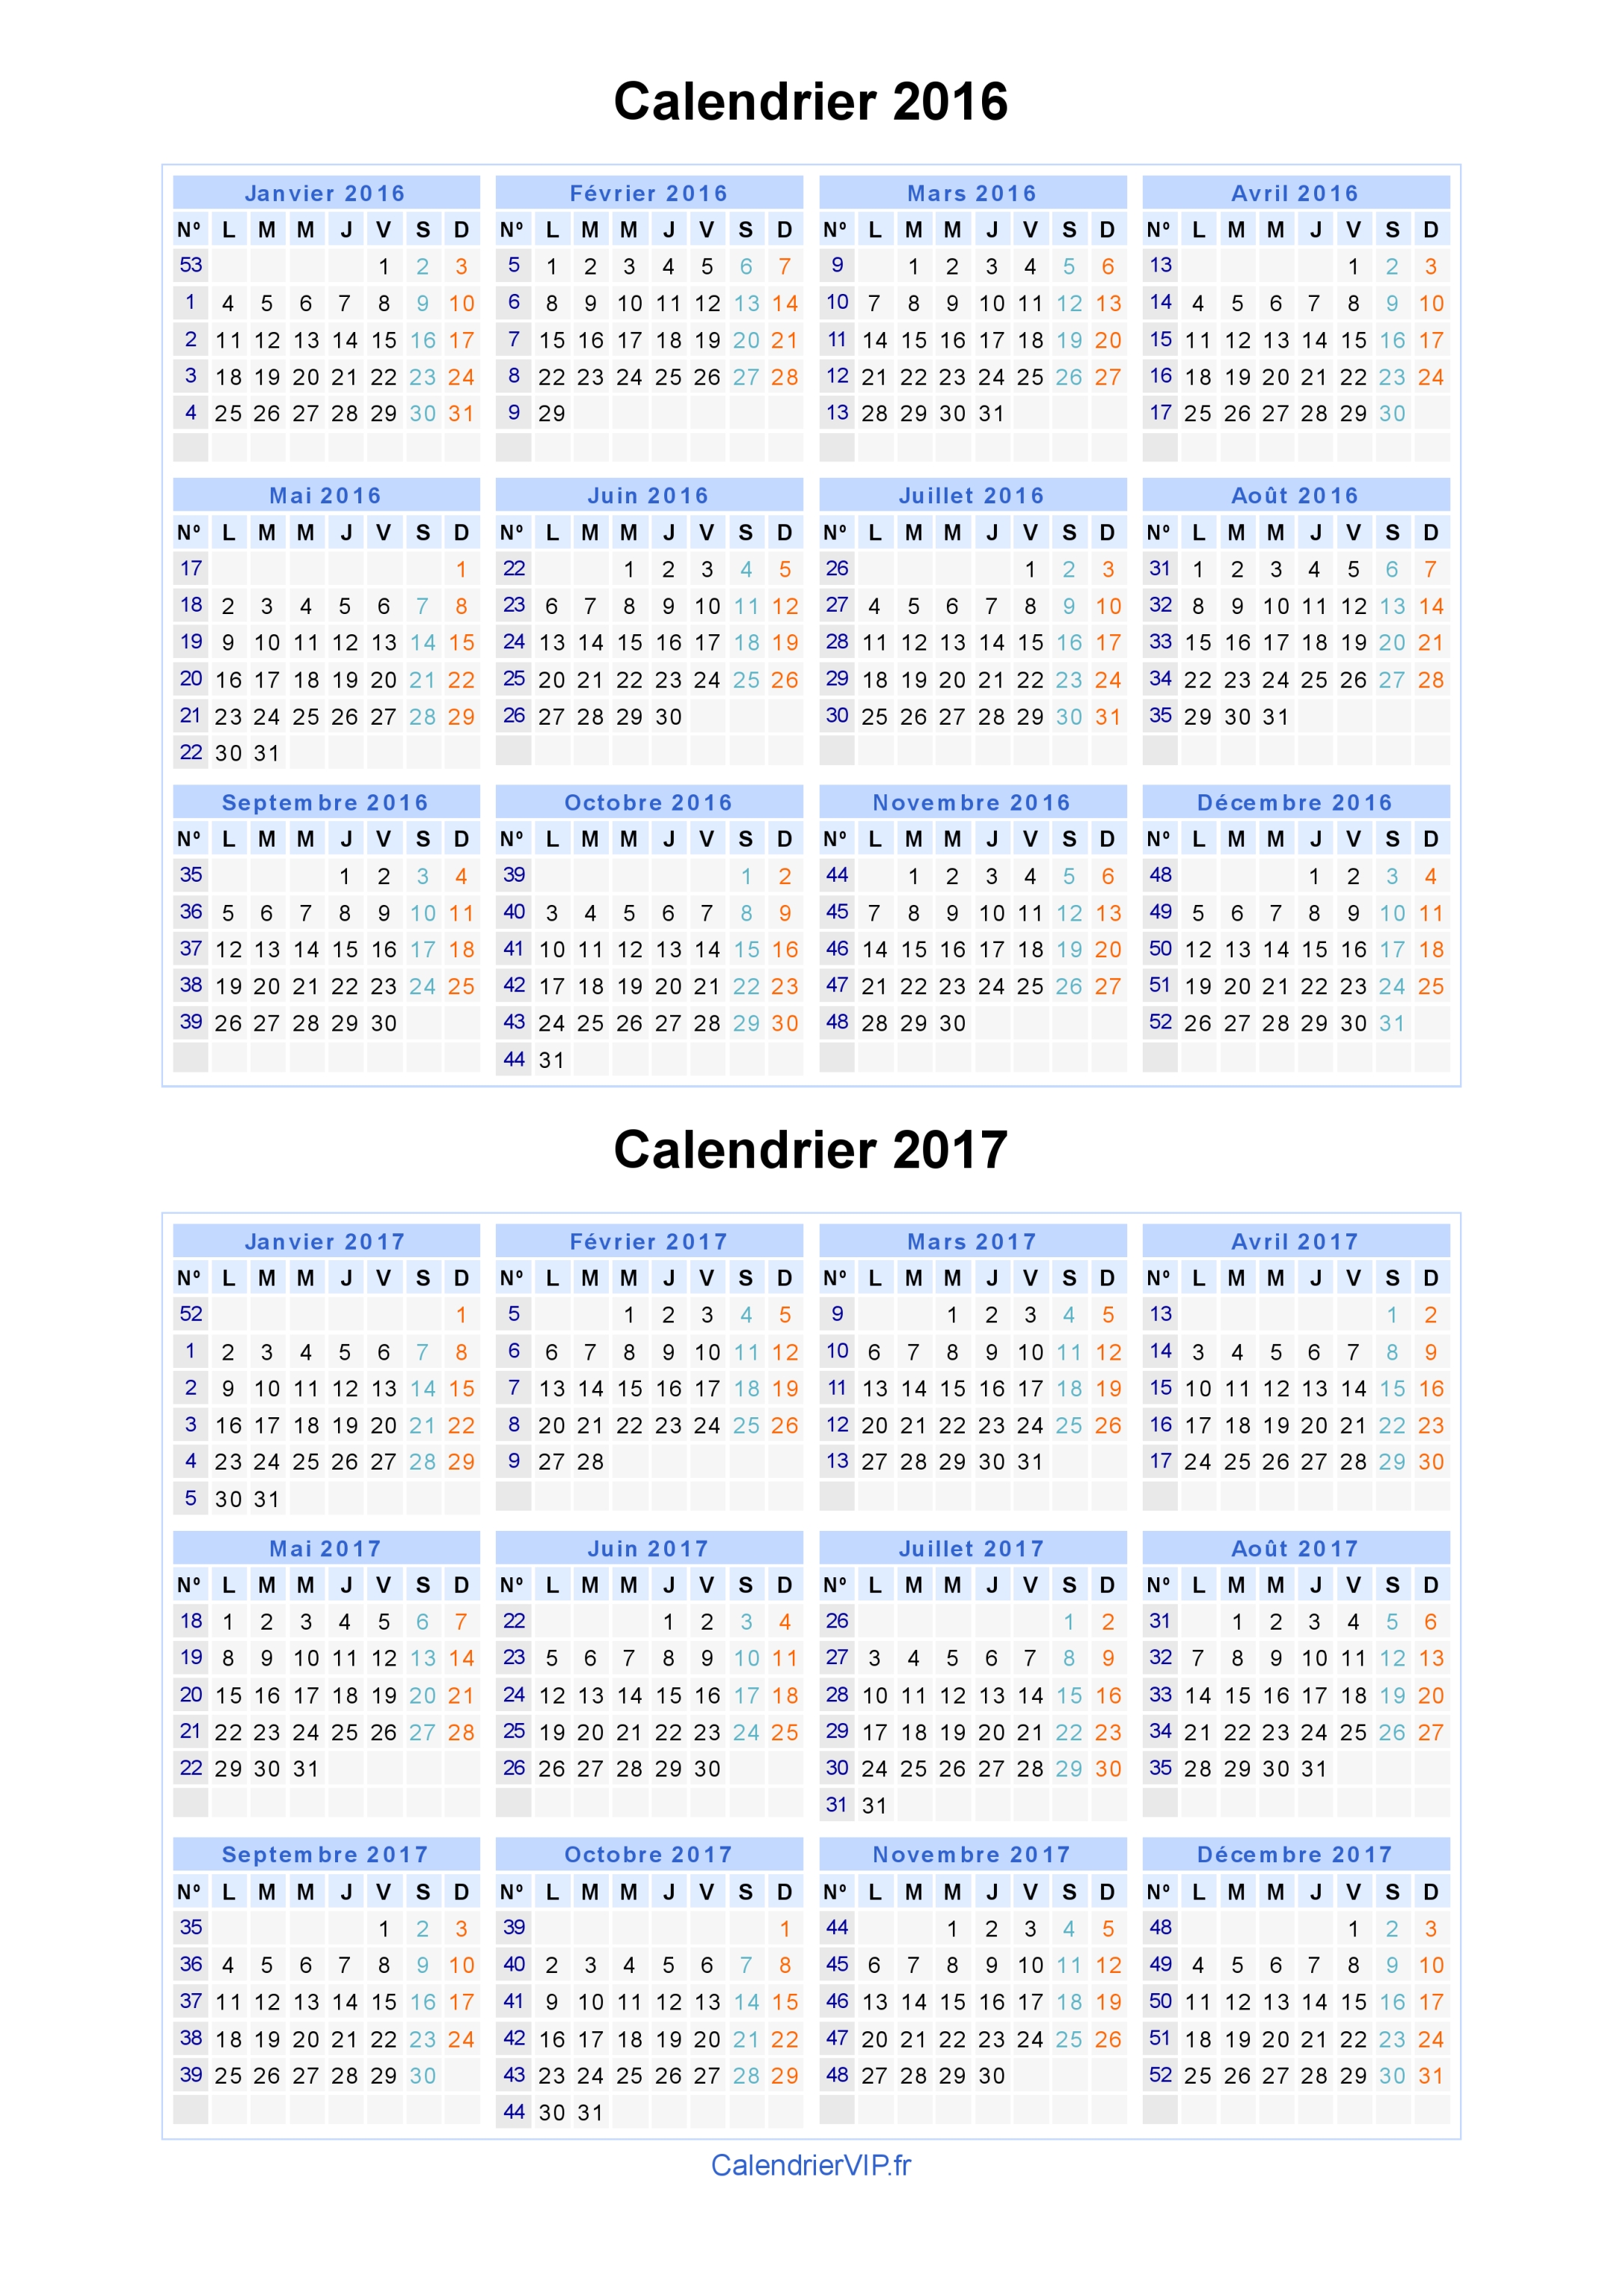 Calendrier a imprimer 2016 et 2017